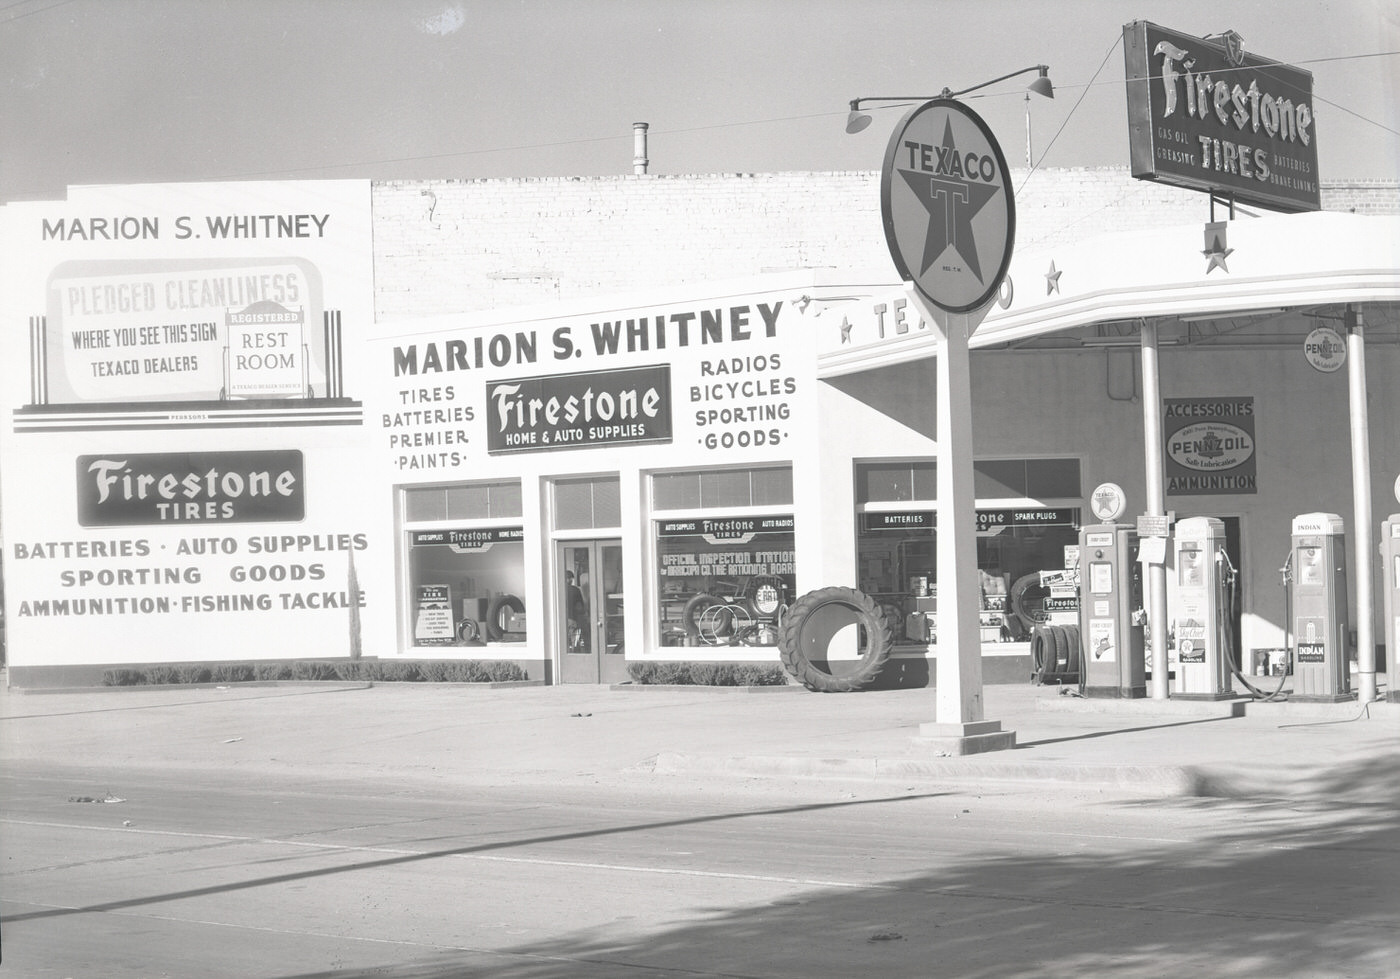 Marion S. Whitney Texaco Station Exterior, 1944